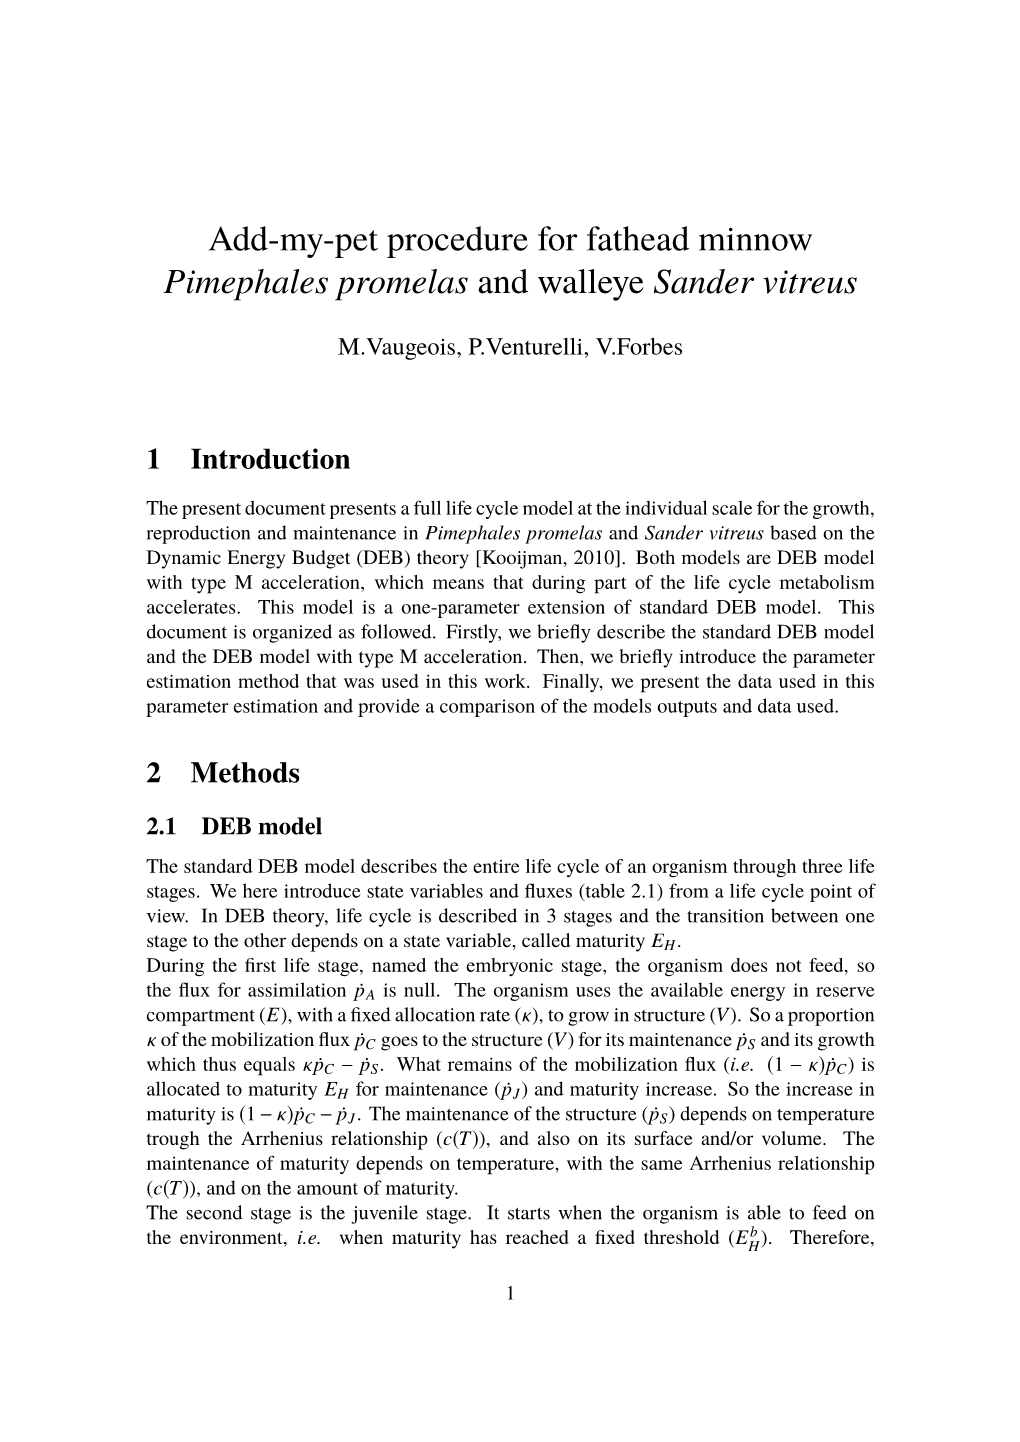 Add-My-Pet Procedure for Fathead Minnow Pimephales Promelas and Walleye Sander Vitreus